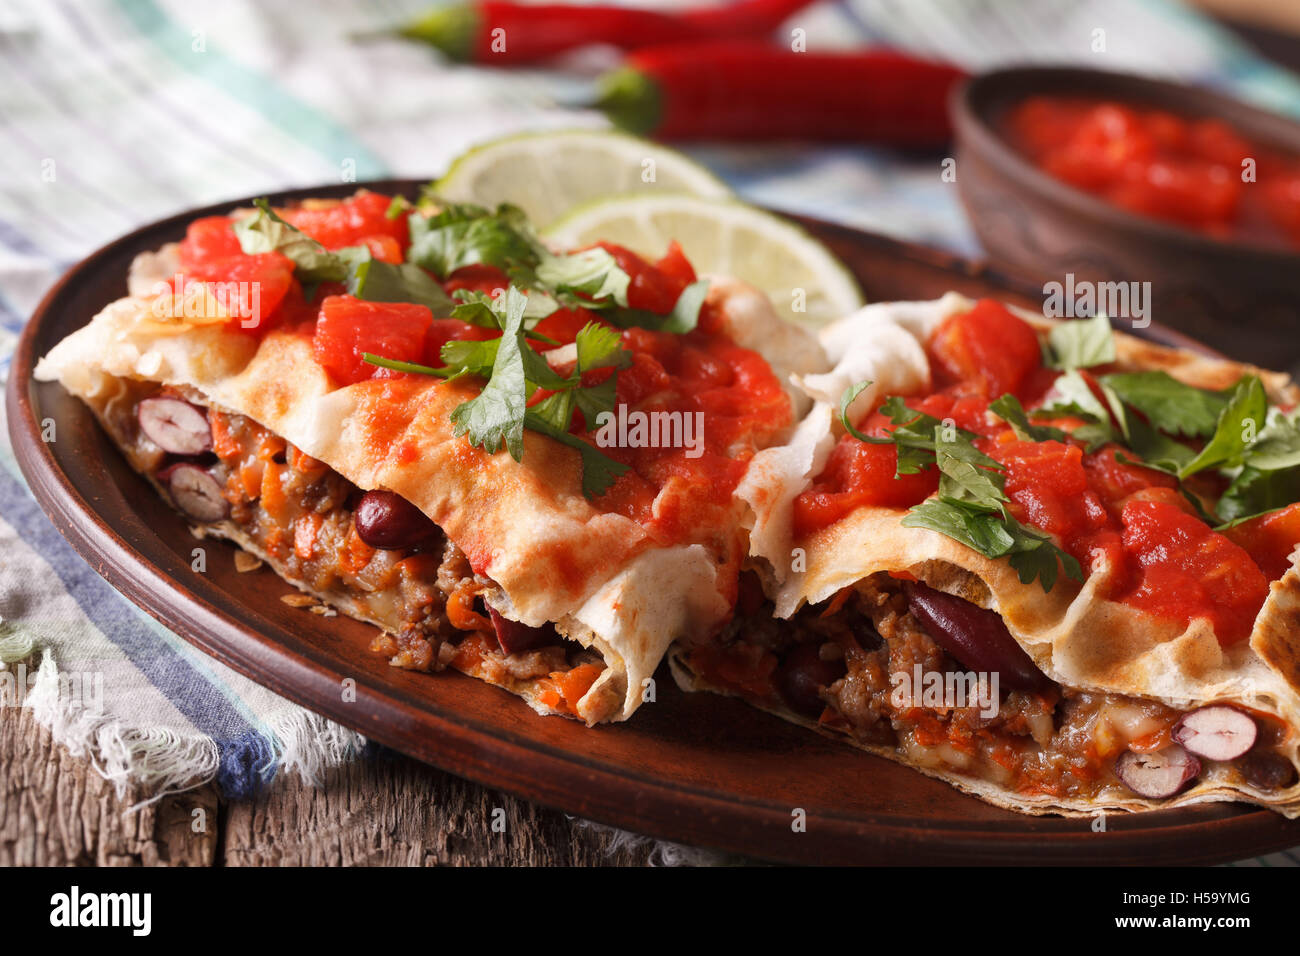 Mexican Food: chimichanga with tomato salsa on a plate close-up horizontal Stock Photo